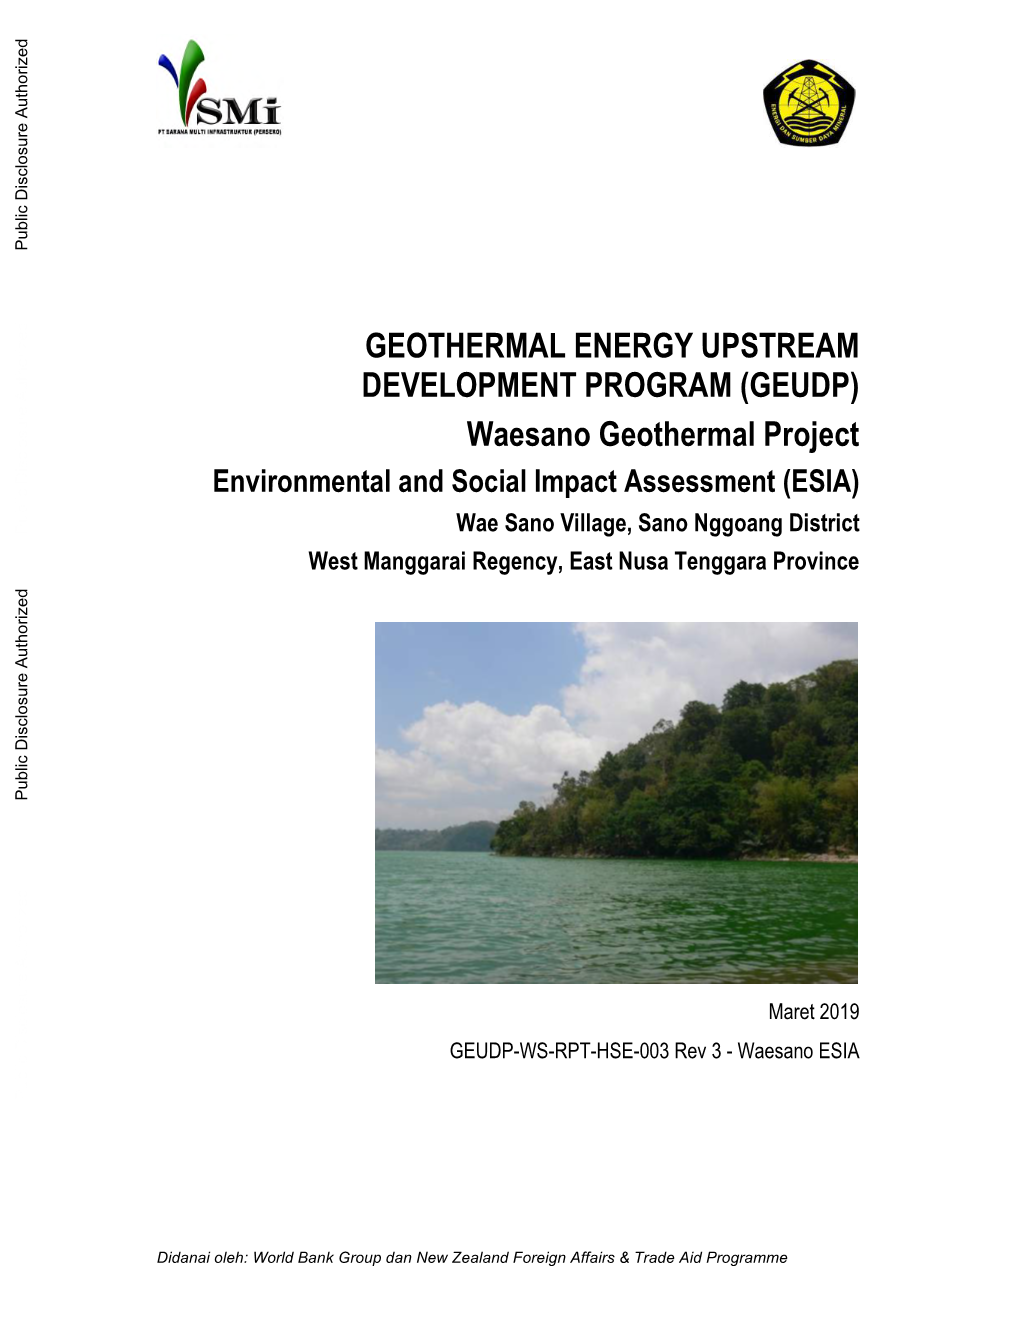 GEUDP) Waesano Geothermal Project Environmental and Social Impact Assessment (ESIA